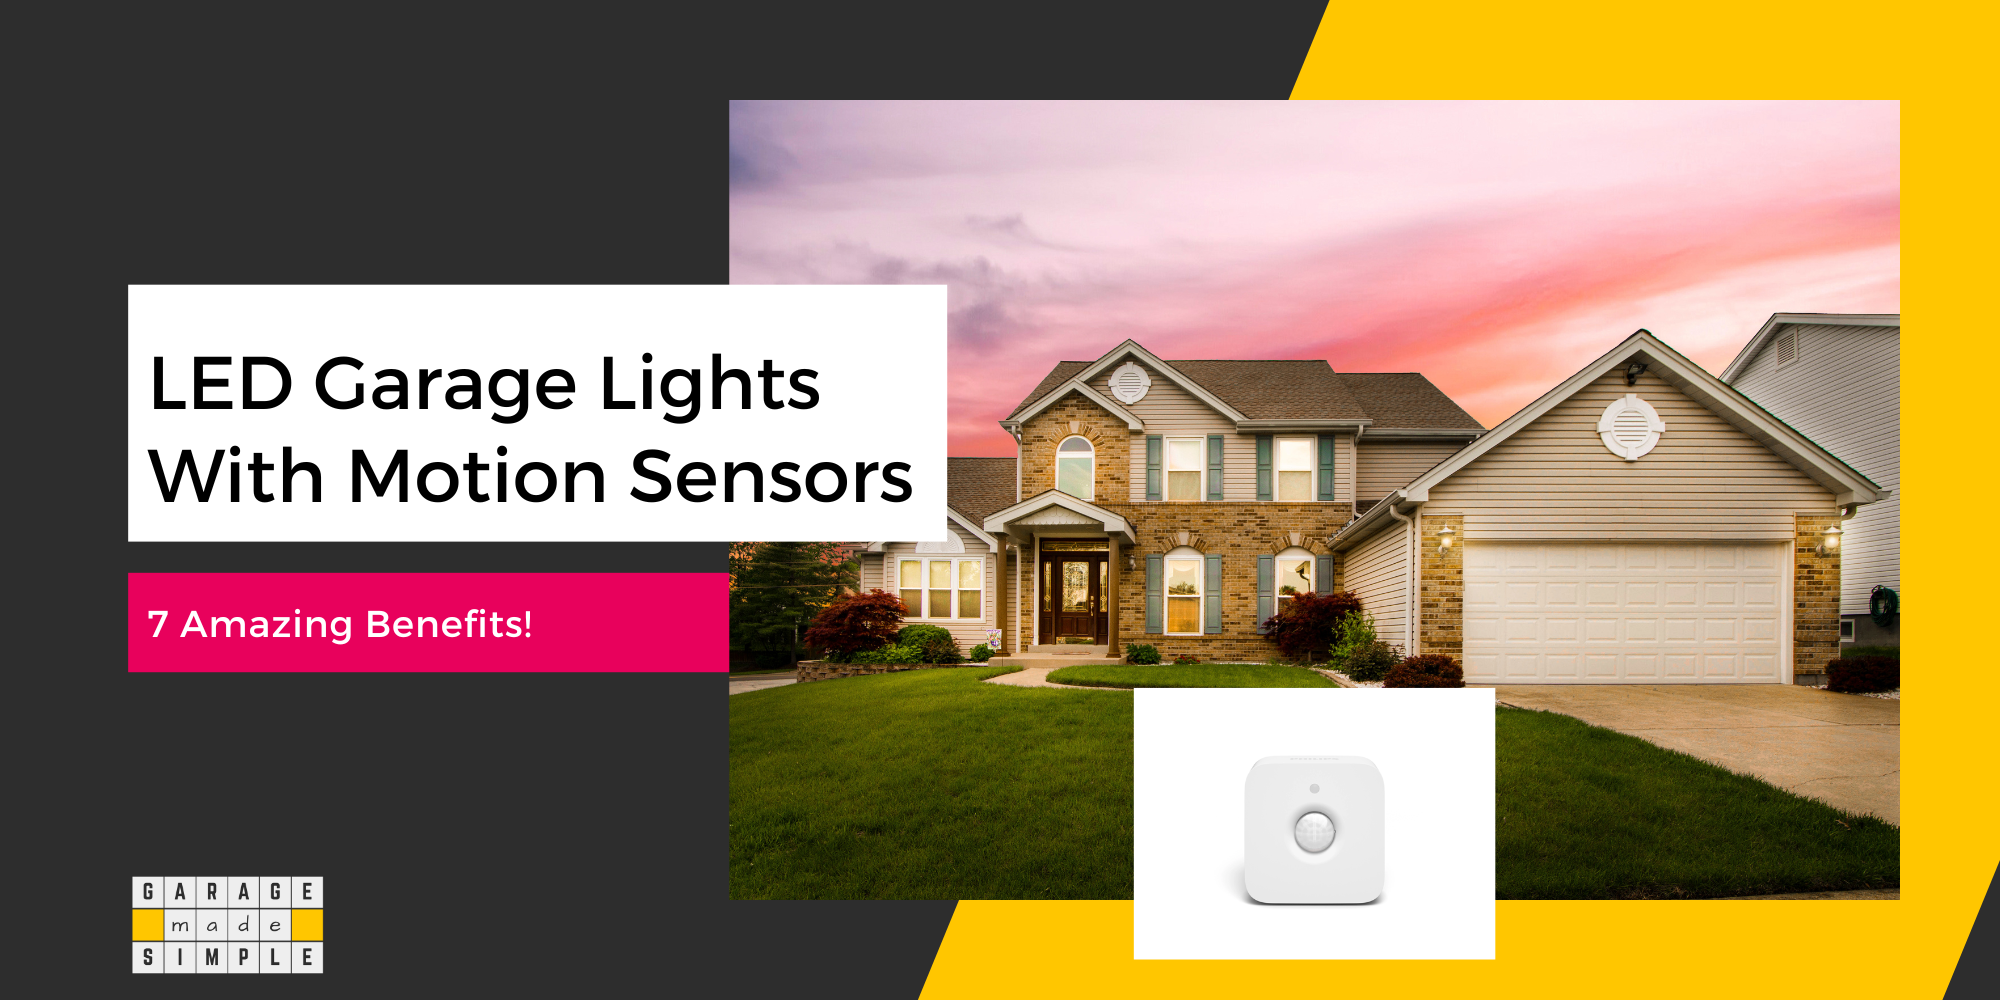 7 Amazing Benefits of LED Garage Lights with Motion Sensors!